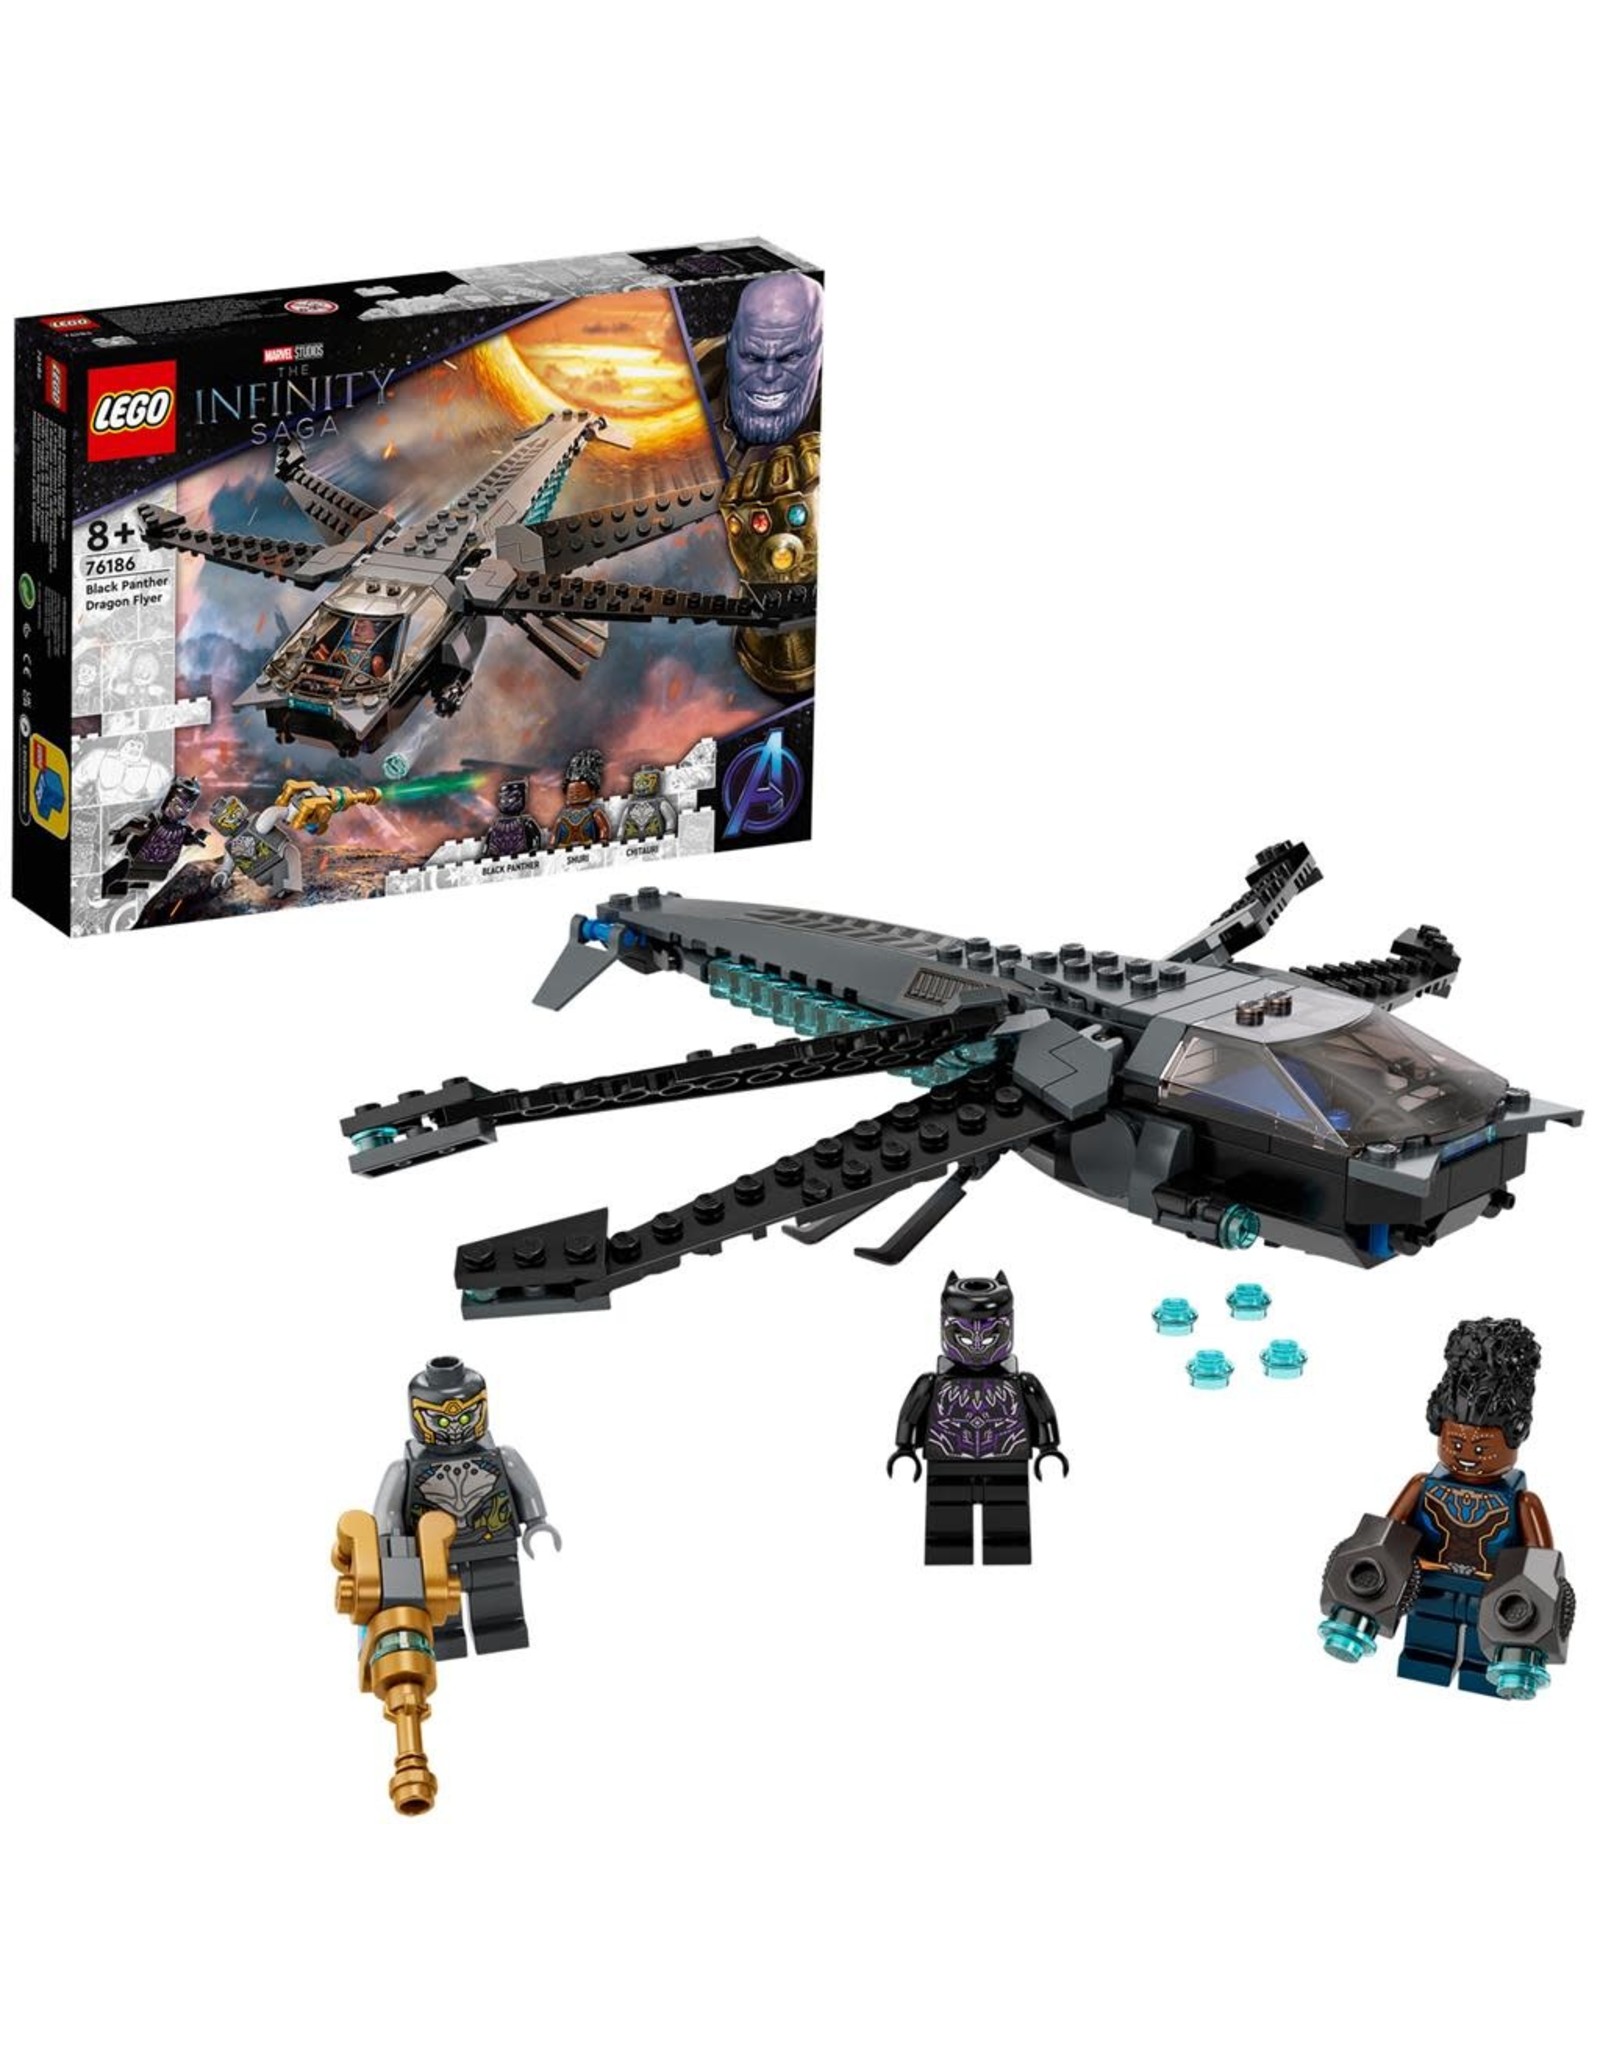 LEGO Lego Super Heroes 76186 Black Panther Dragon Flyer